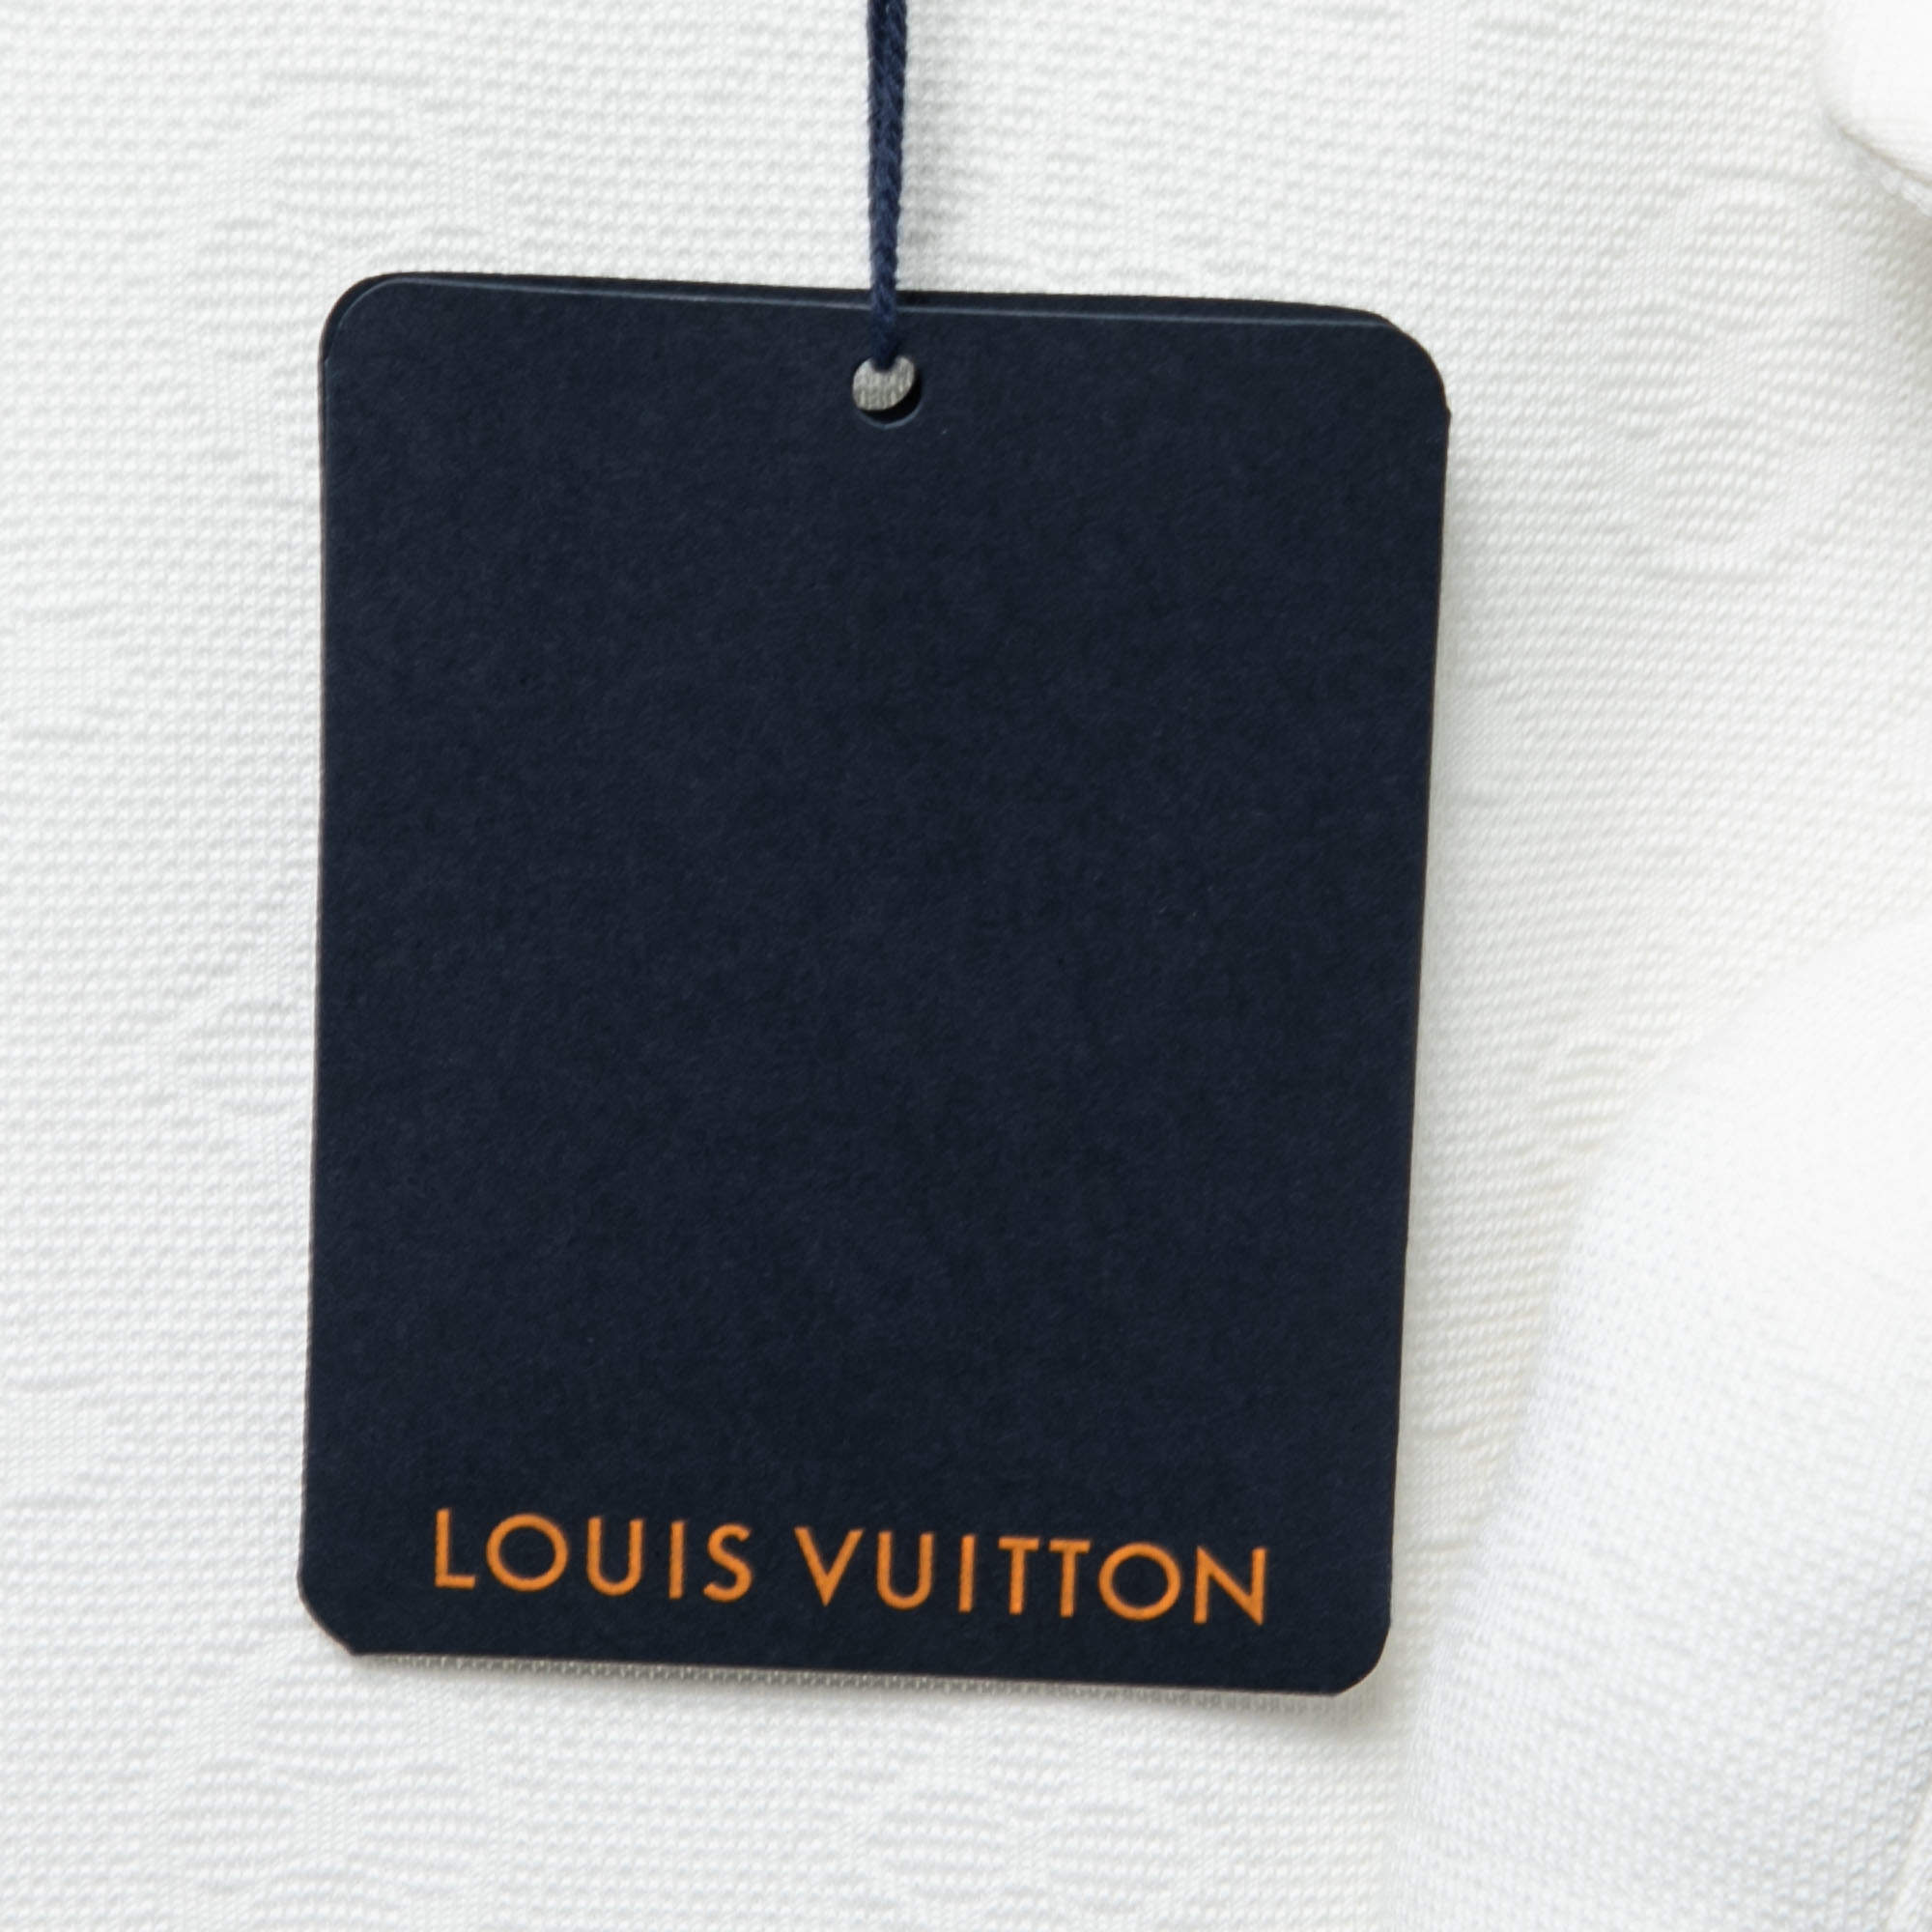 Louis Vuitton X Virgil Abloh White Cotton 3D Monkey T-Shirt M Louis Vuitton